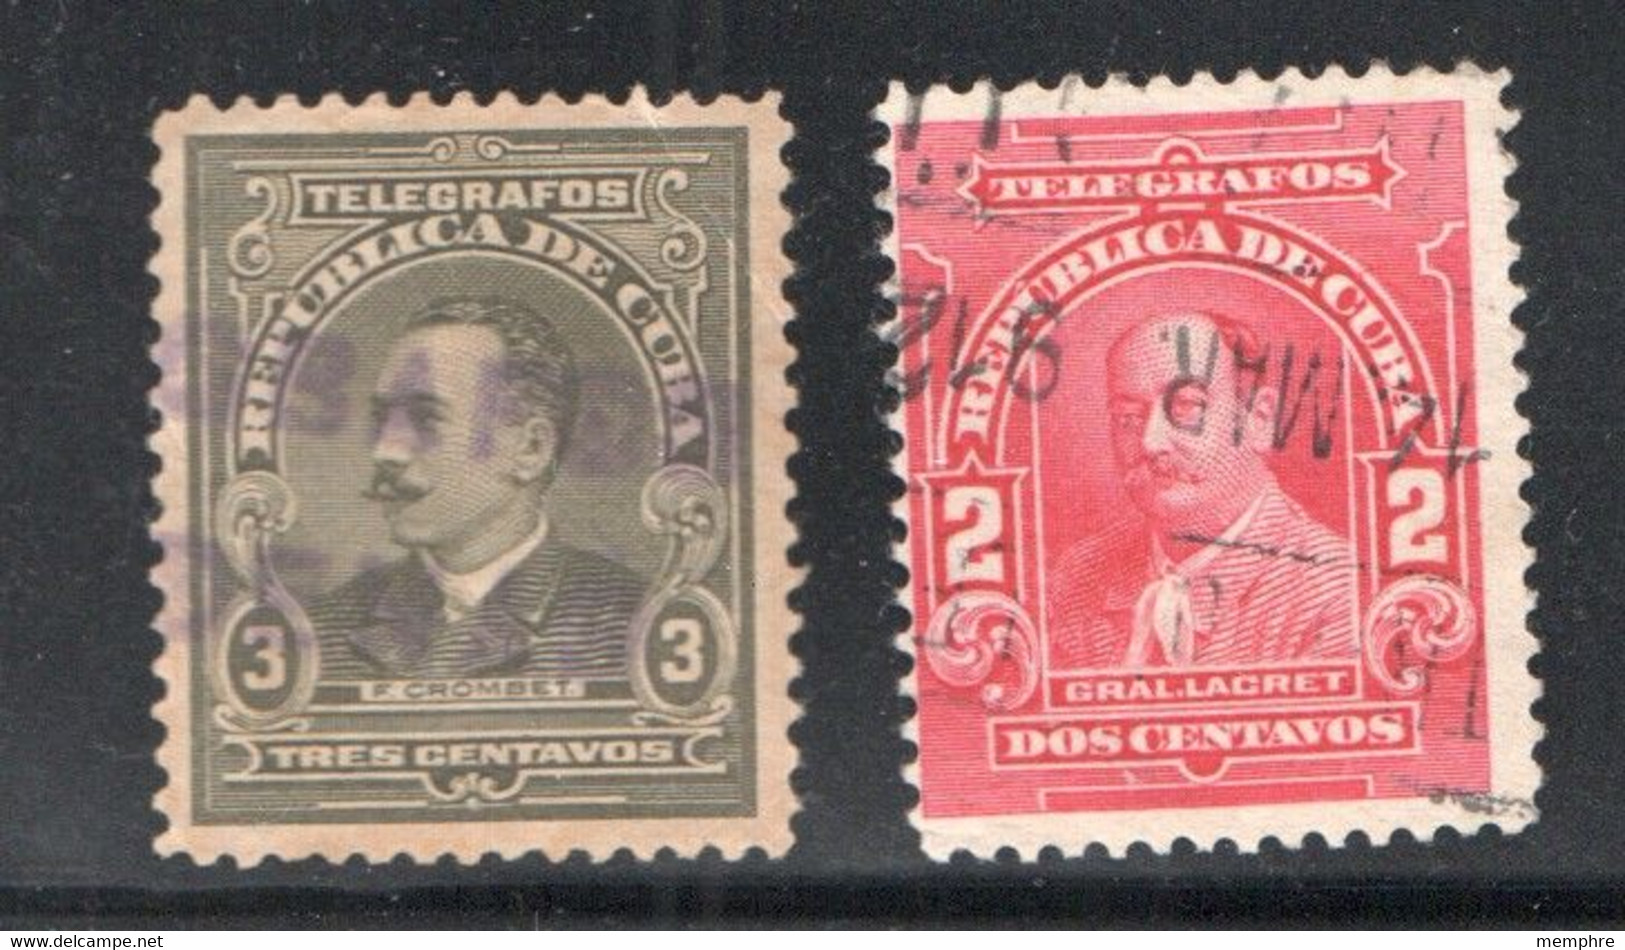 Telegraph Stamps Ed 87, 93 Used - Telegrafo